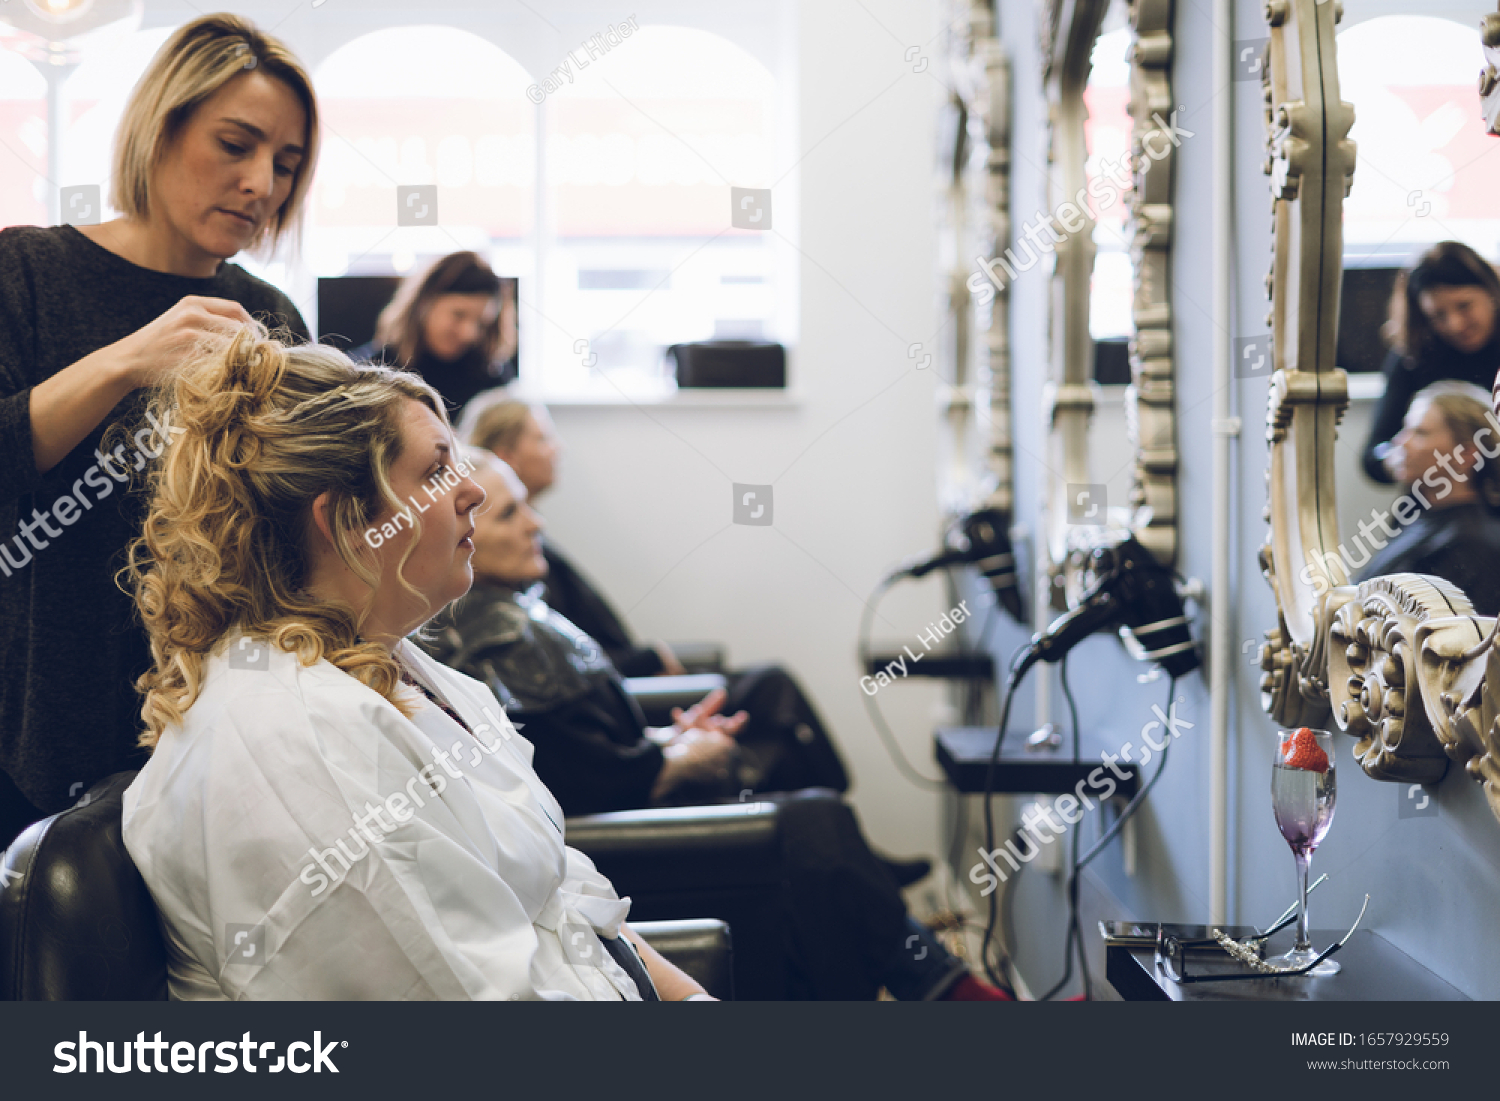 Hair Cut Salon Images Stock Photos Vectors Shutterstock